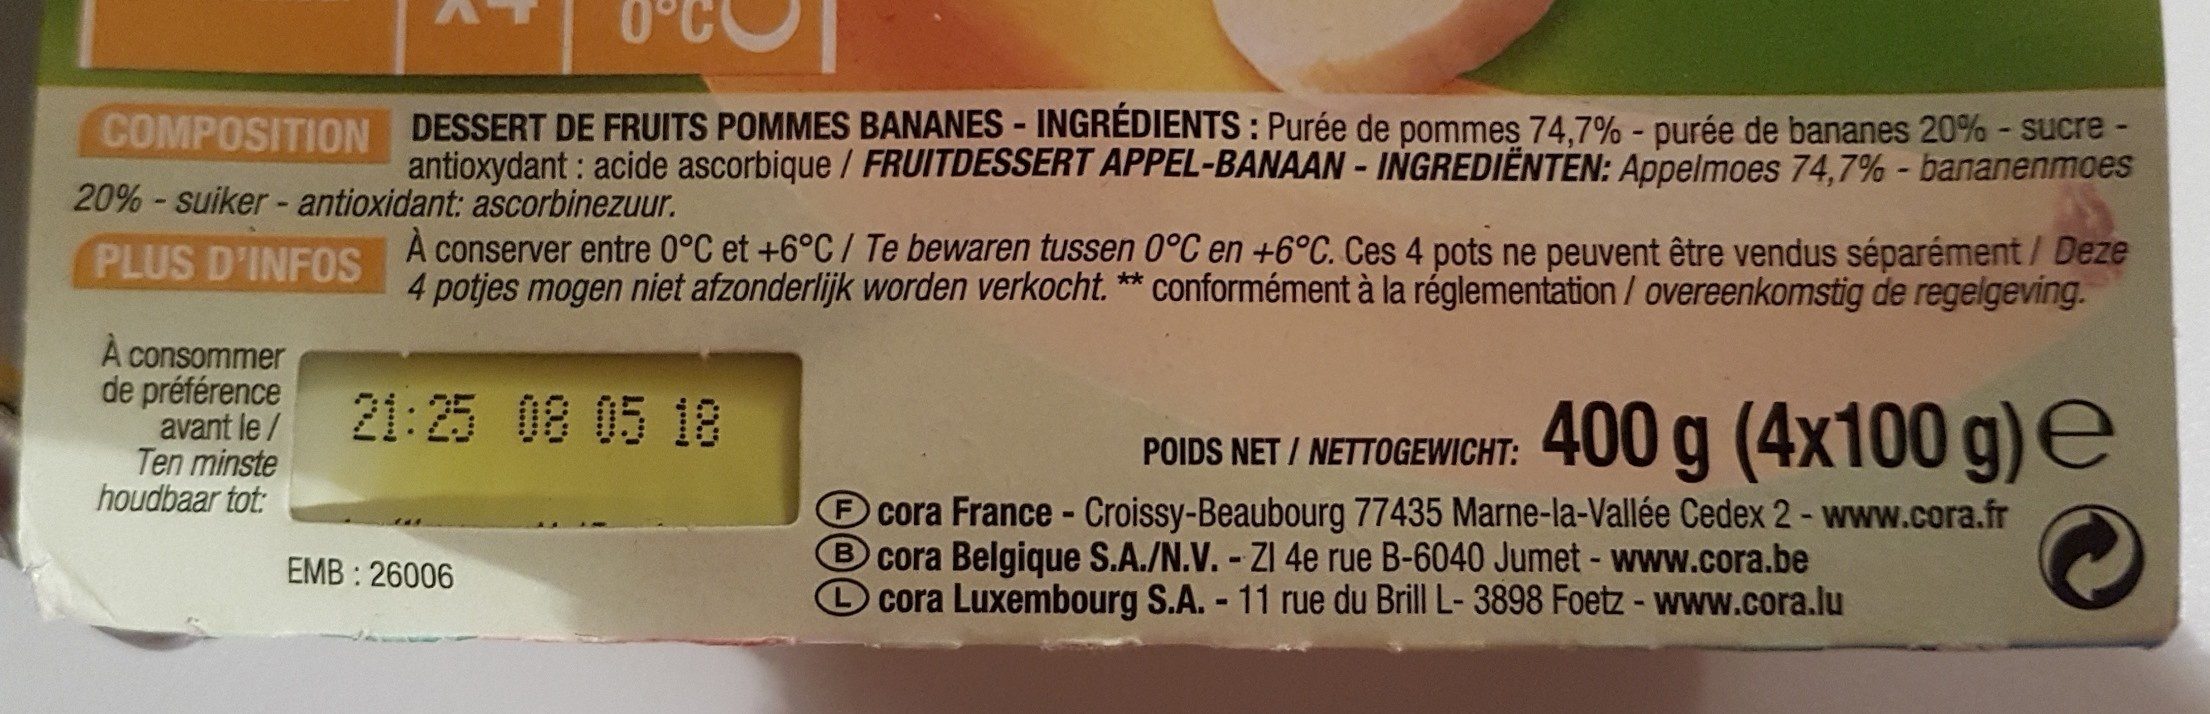 Compote pomme banane - Ingrédients